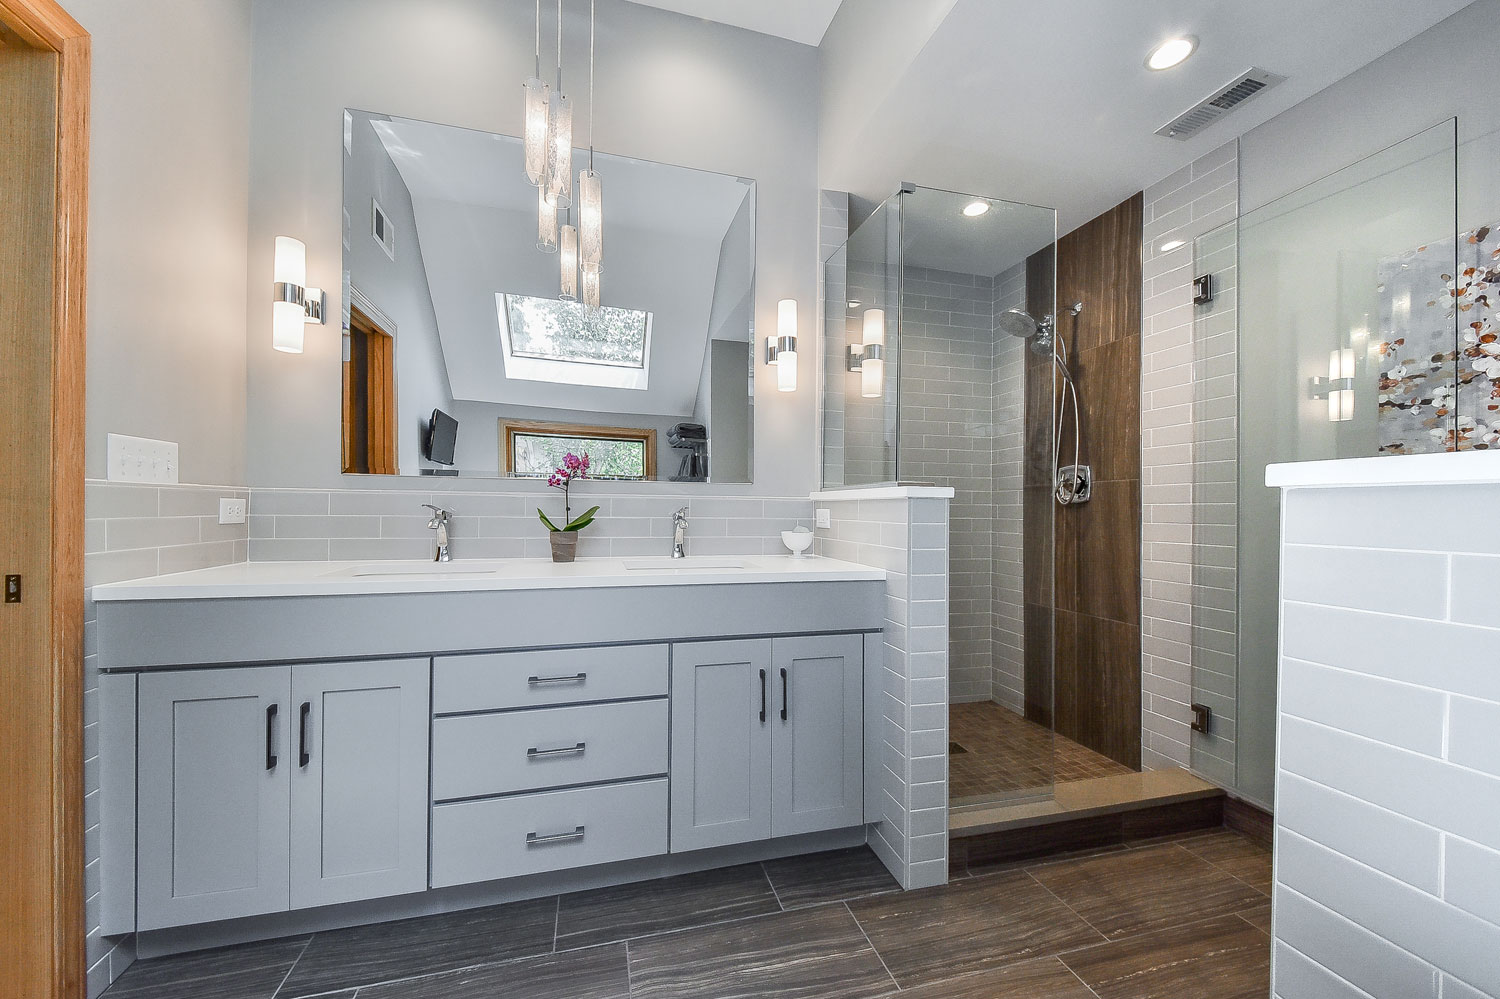 Willow Springs Master Bathroom Remodeling Pictures - Sebring Design Build